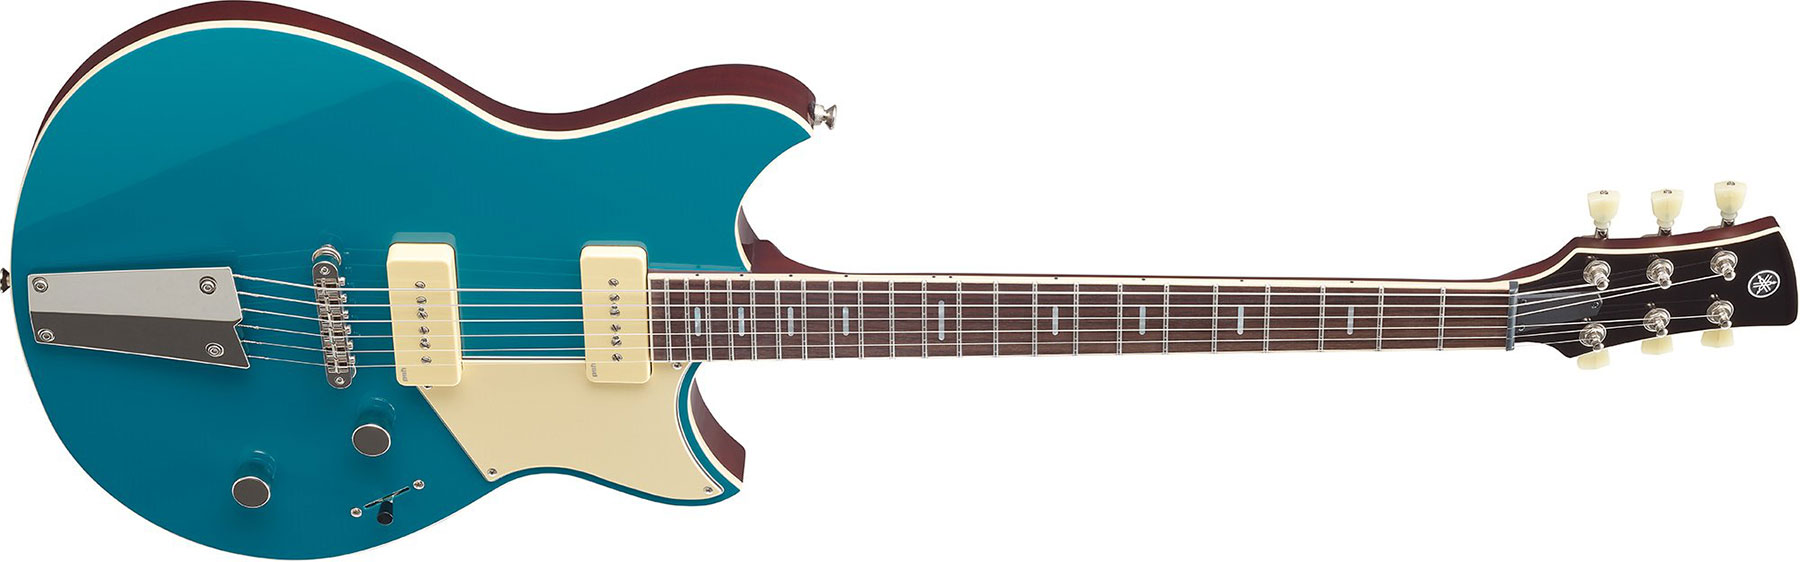 Yamaha Rss02t Revstar Standard 2p90 Ht Rw - Swift Blue - Guitarra eléctrica de doble corte. - Variation 1